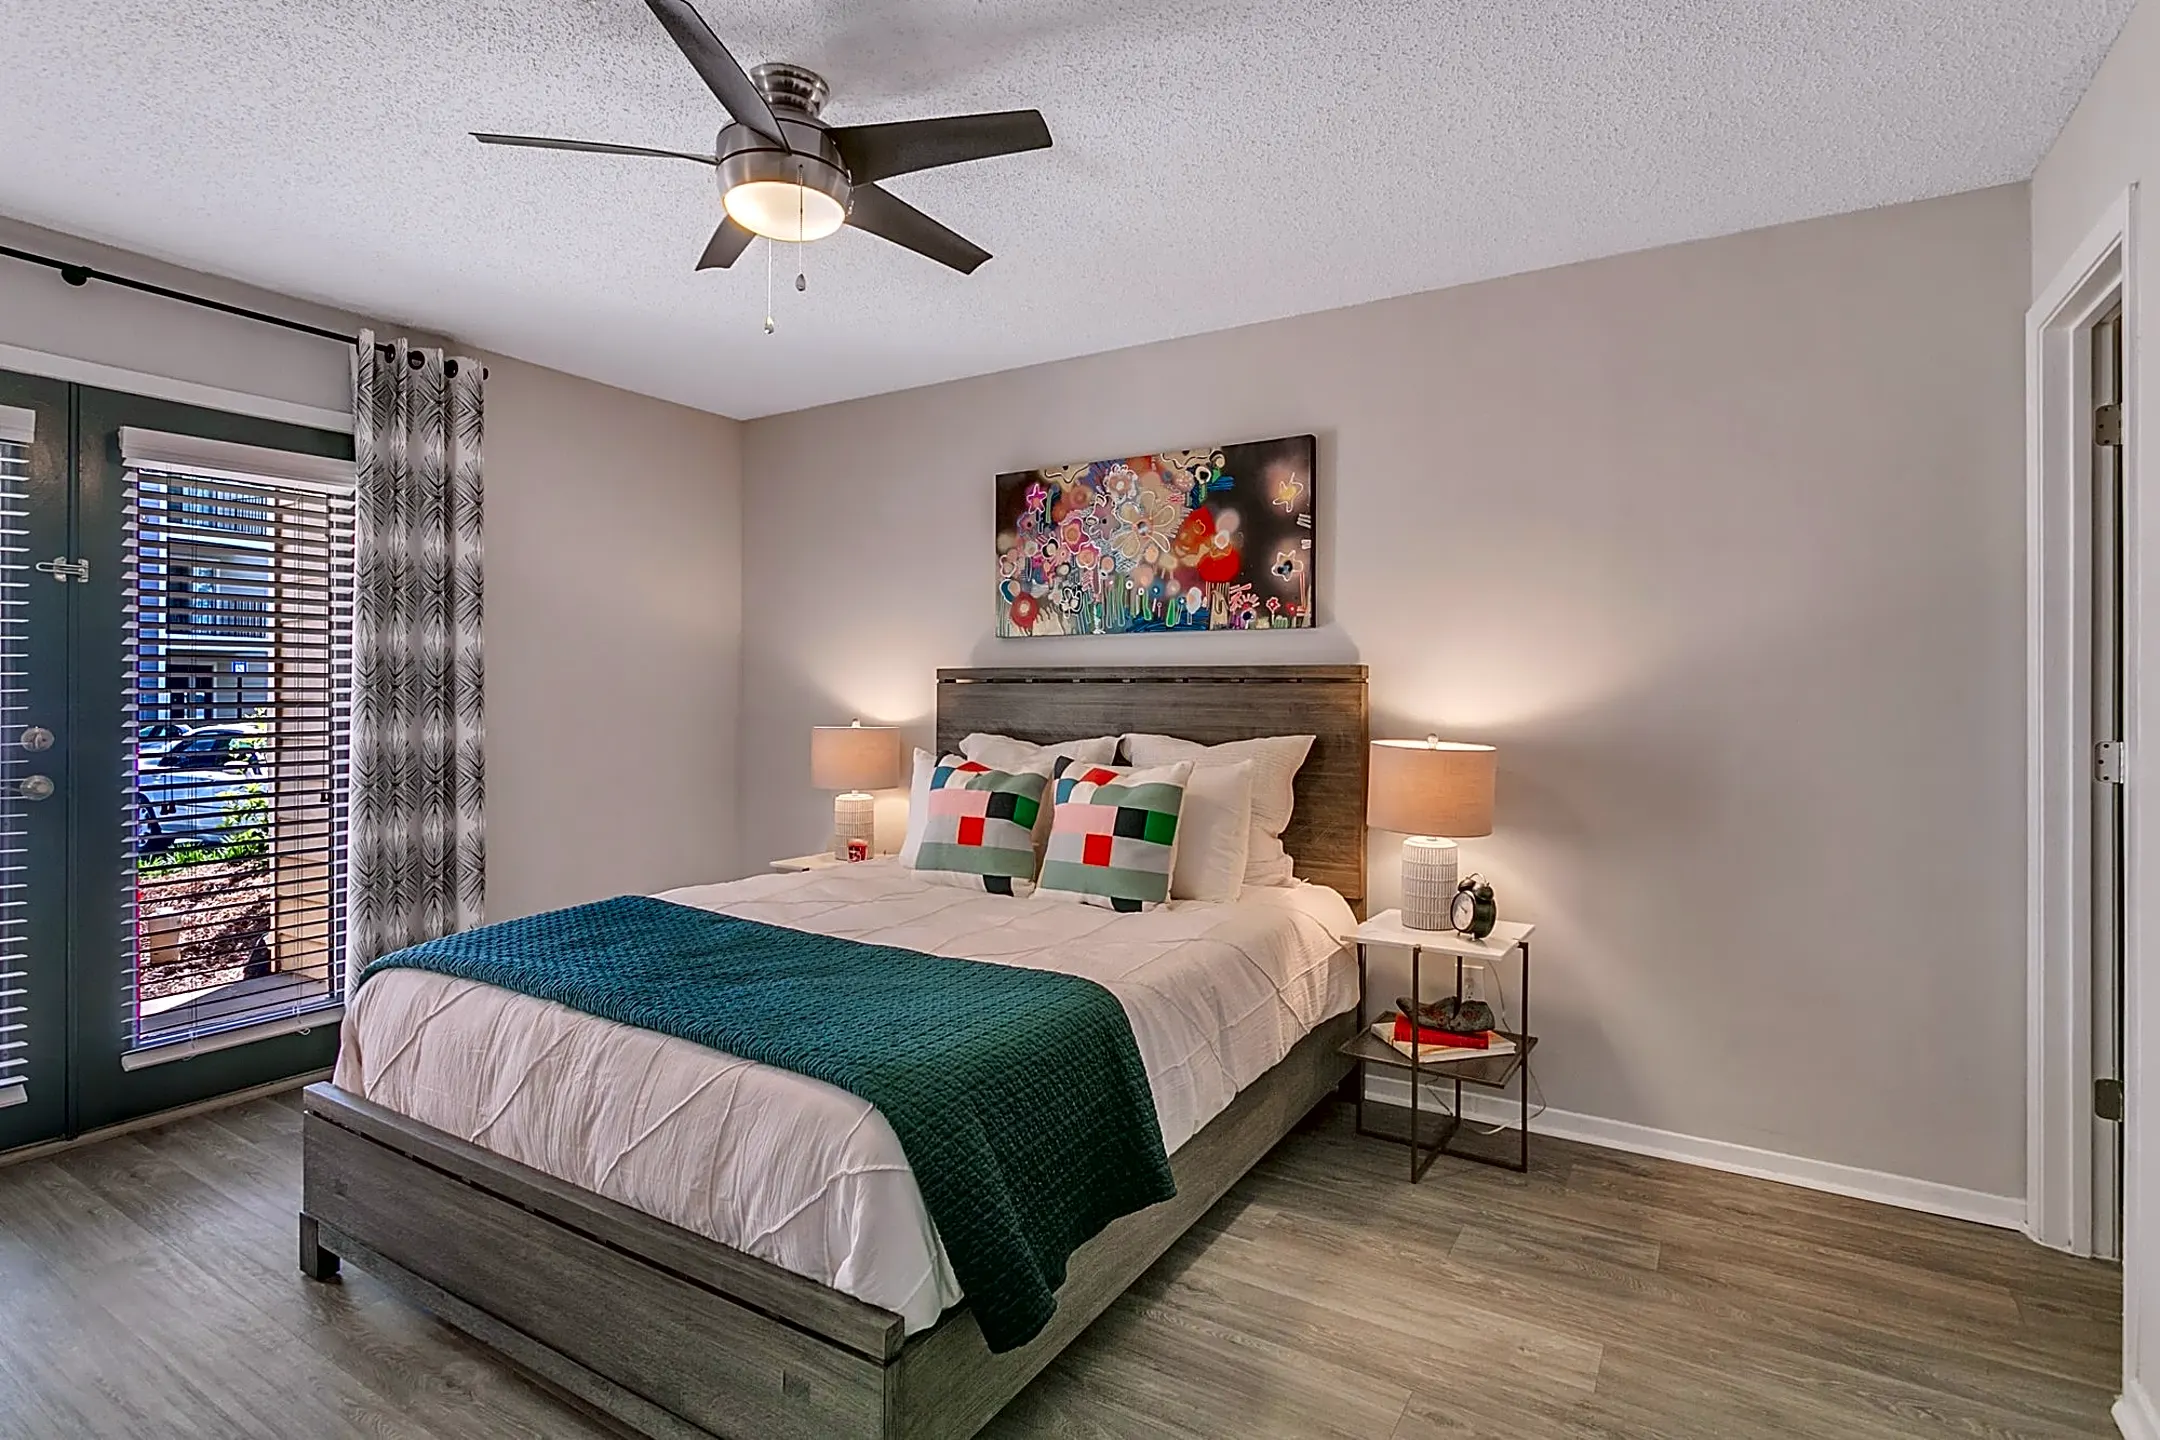 Bedroom - The Clarion Apartments - Decatur, GA